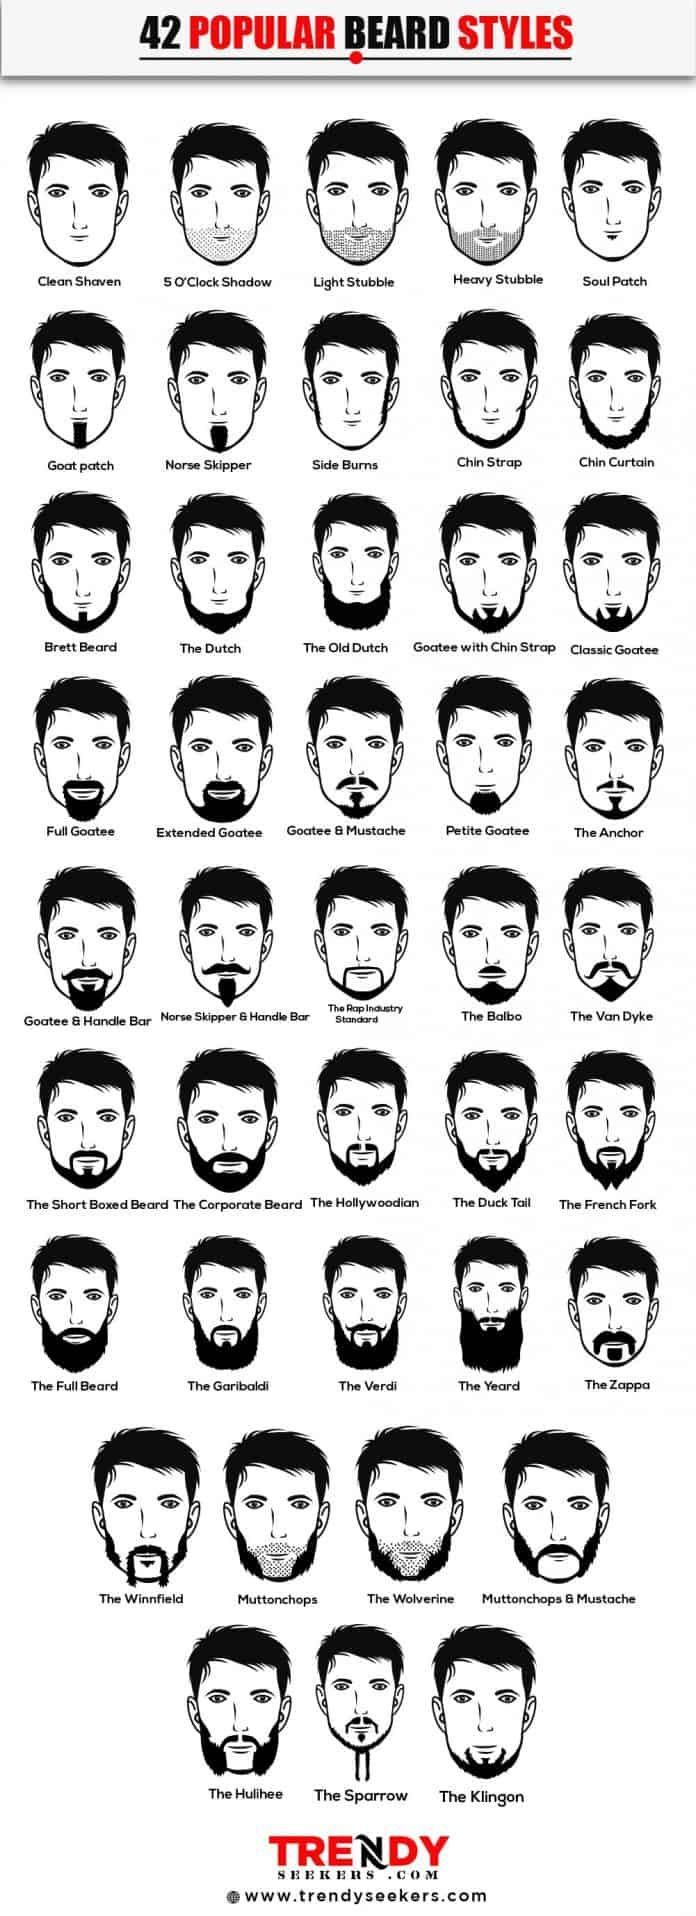 How To Grow A Beard - The 42 Beard Styles (2021) [Ultimate Guide]